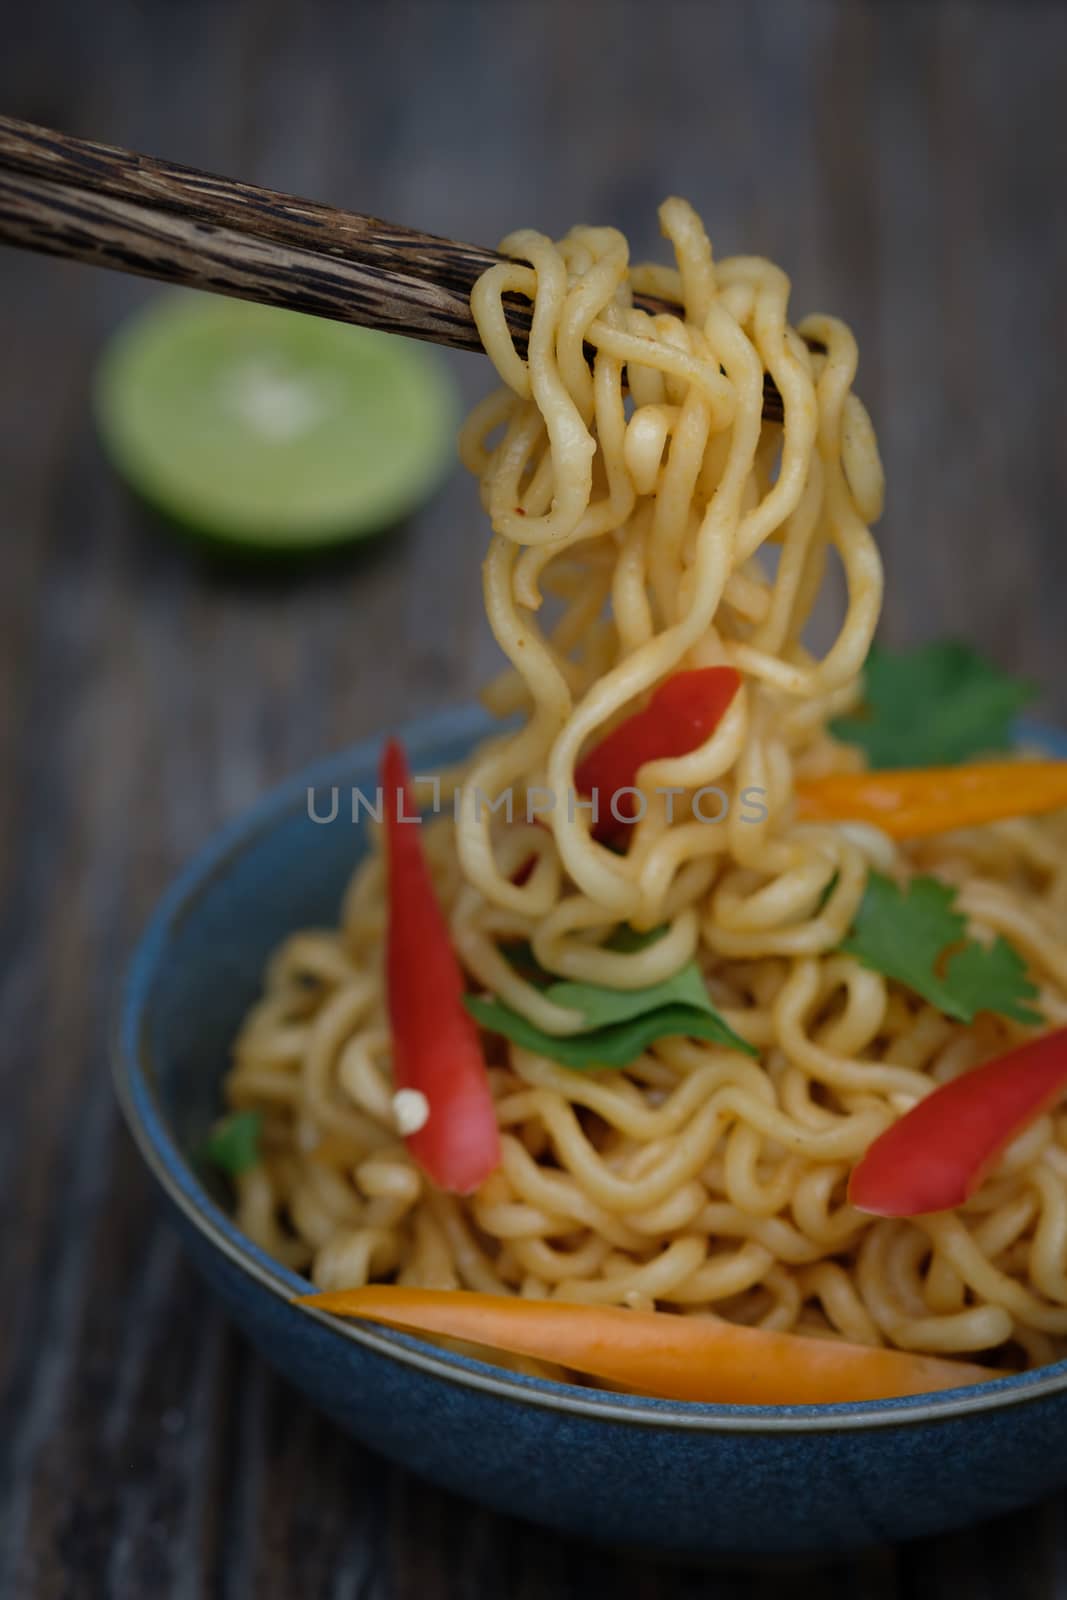 Still life instant noodles with sliced bell pepper on chopstick, junk food or fast food concept.